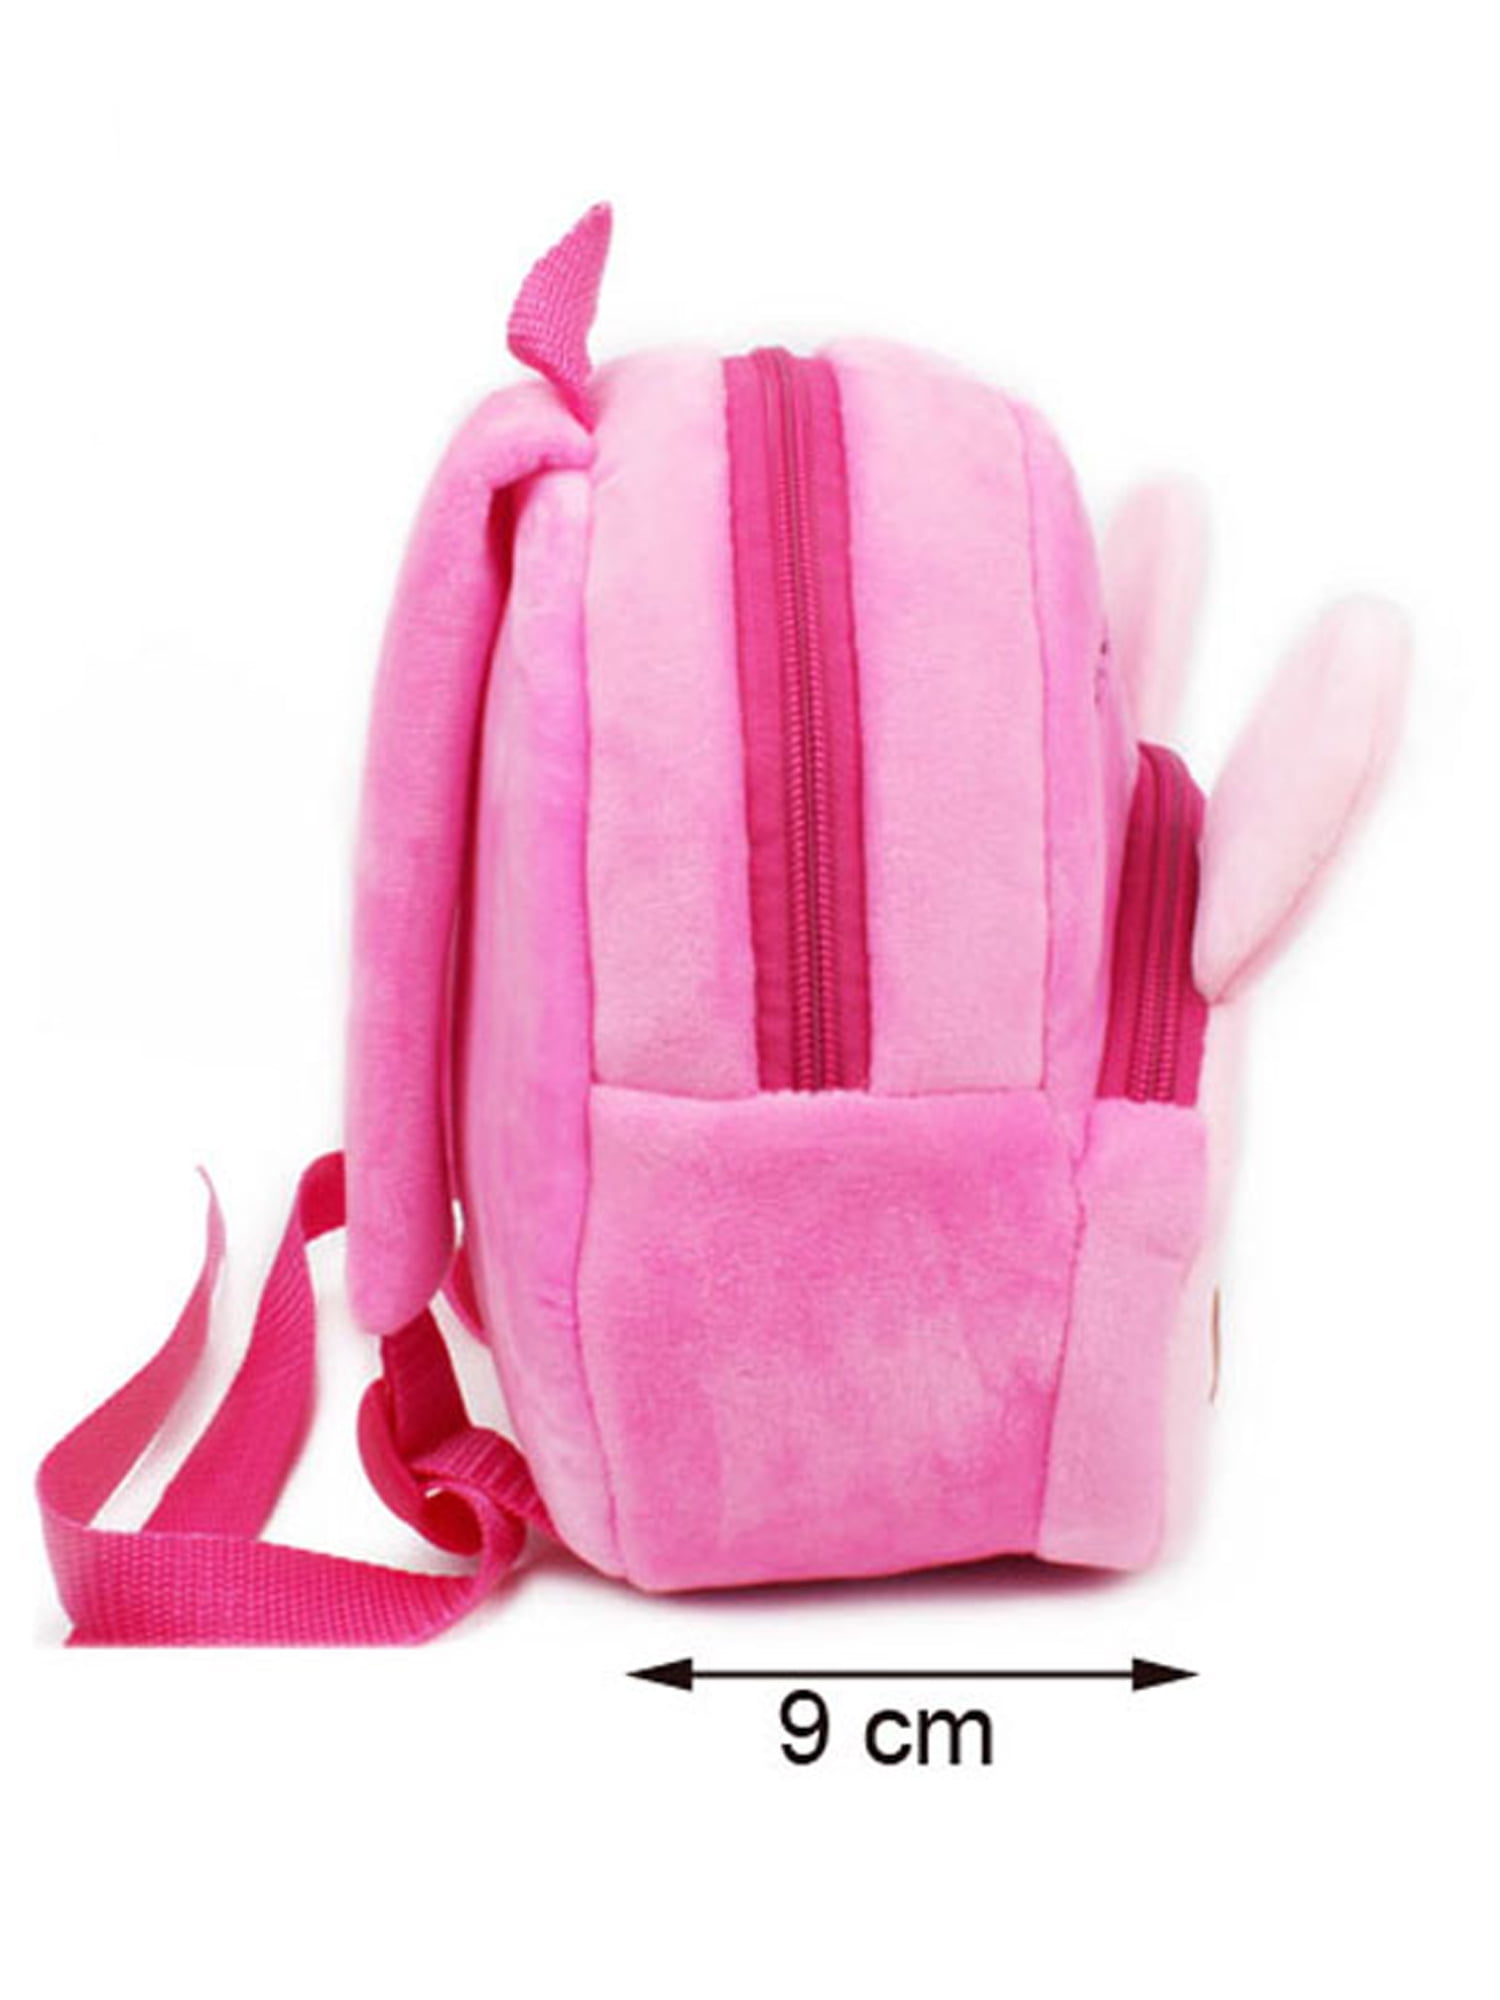 Children Princess Kindergarten School Bag Toddler Girl Backpack Book Bags